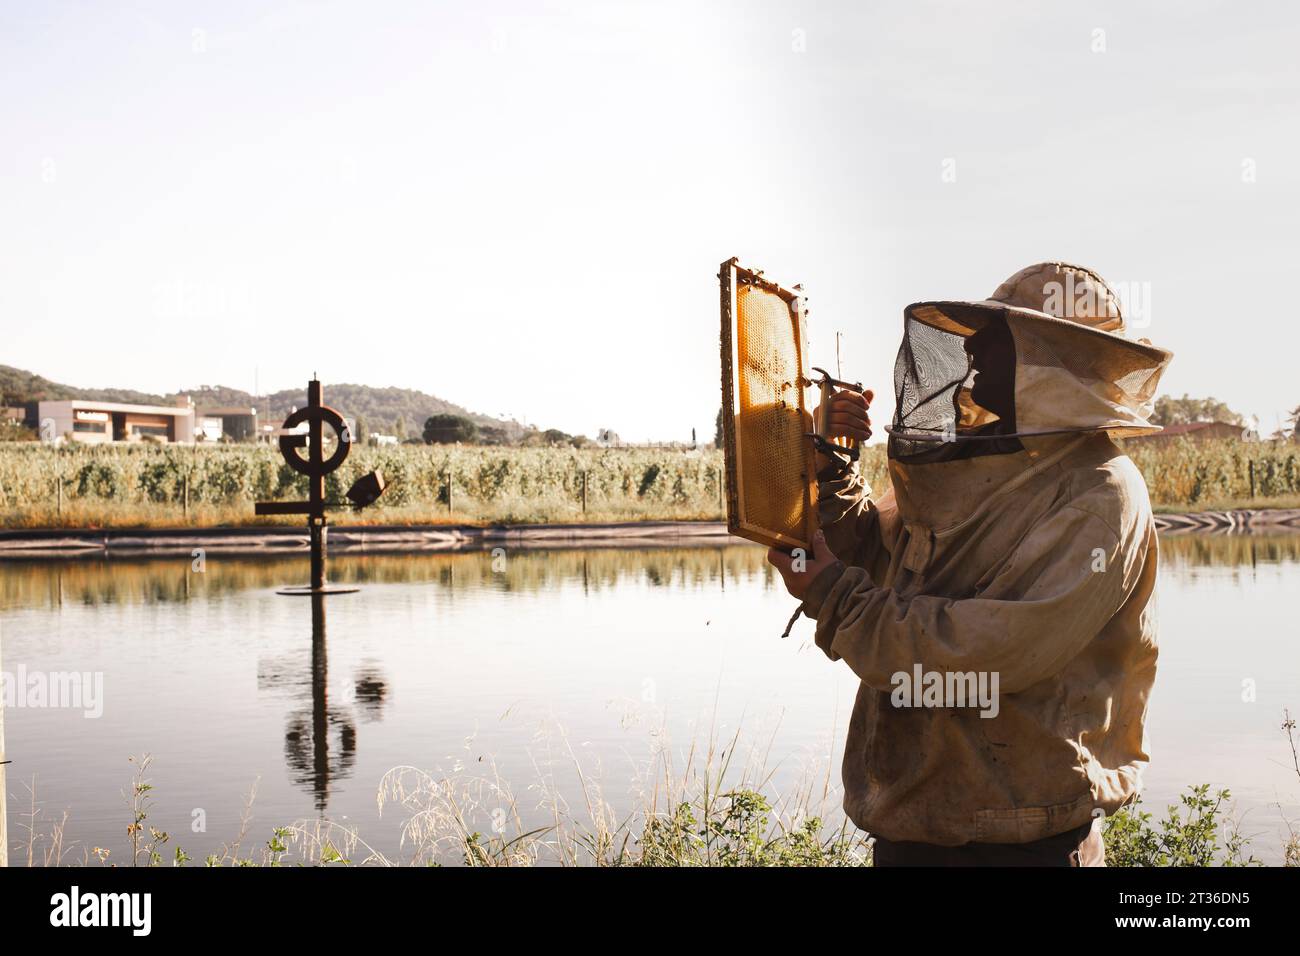 Beekeeper using tool on hive frame standing near lake Stock Photo